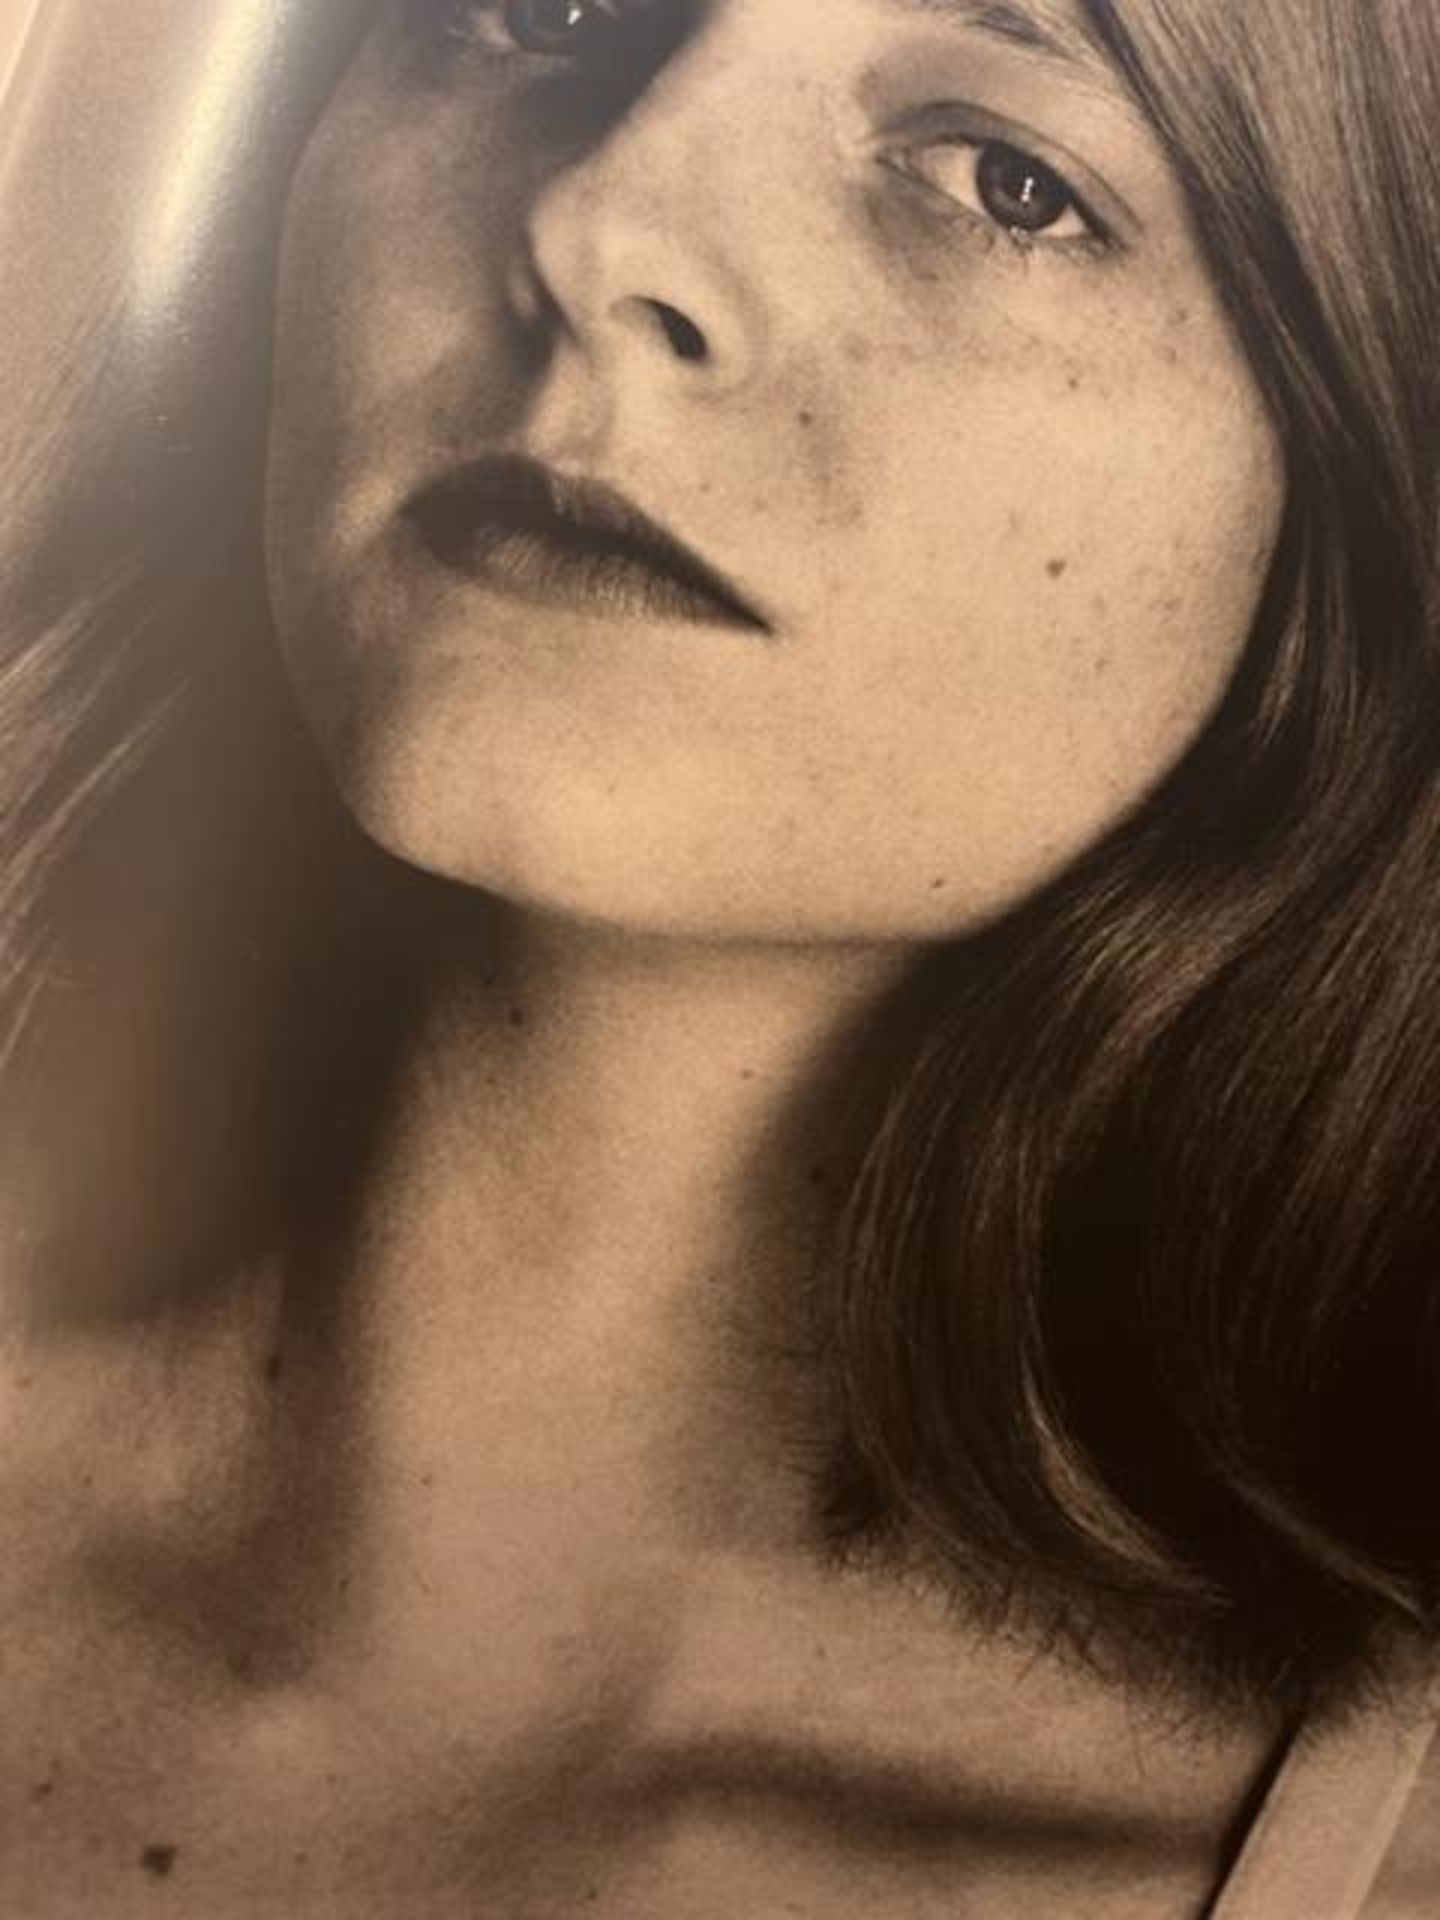 Helmut Newton "Jodie Foster" Print. - Image 6 of 6